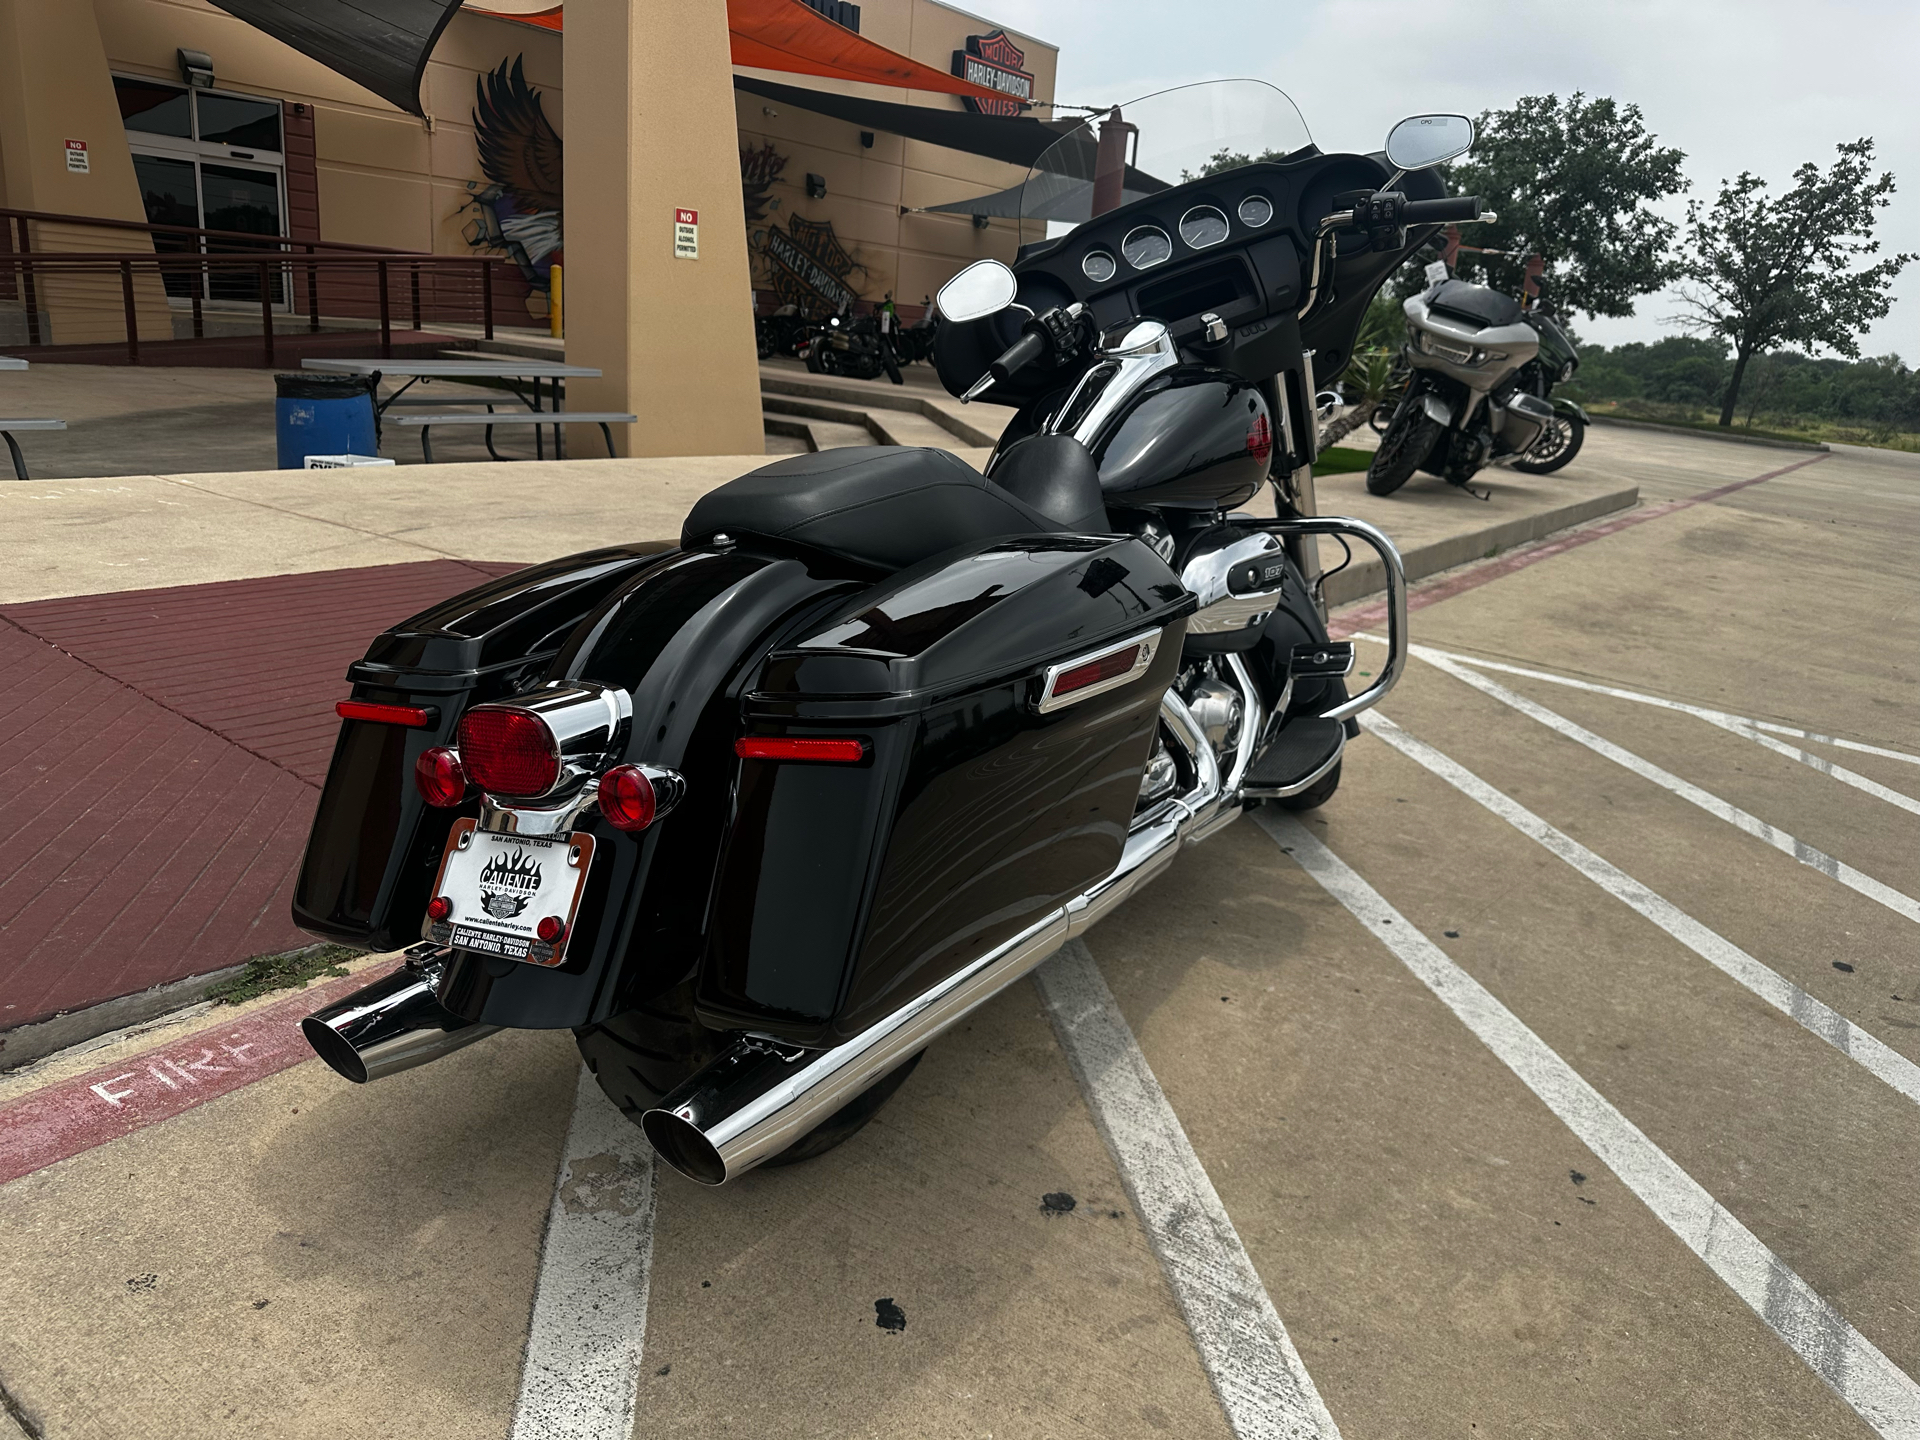 2022 Harley-Davidson Electra Glide® Standard in San Antonio, Texas - Photo 8